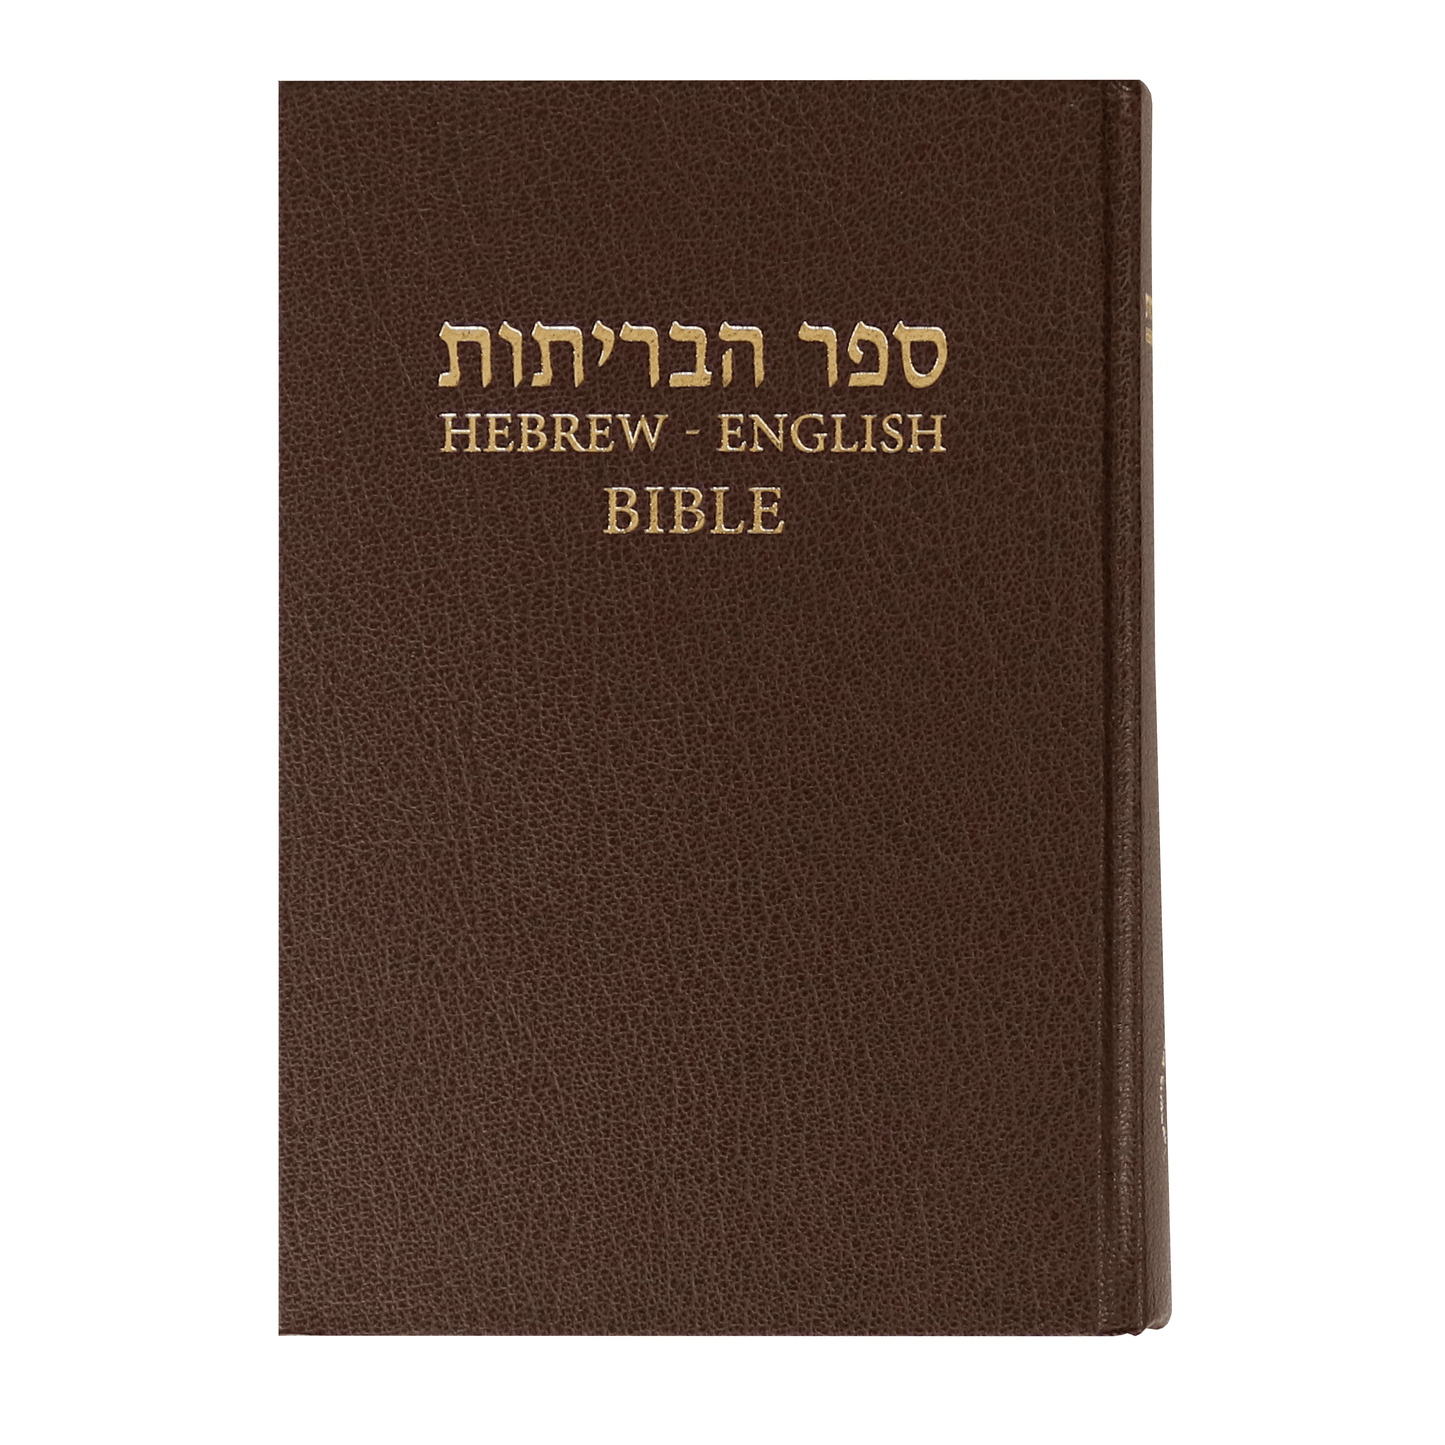 Hebrew-English (NASB) Diglot Bible - Hardcover